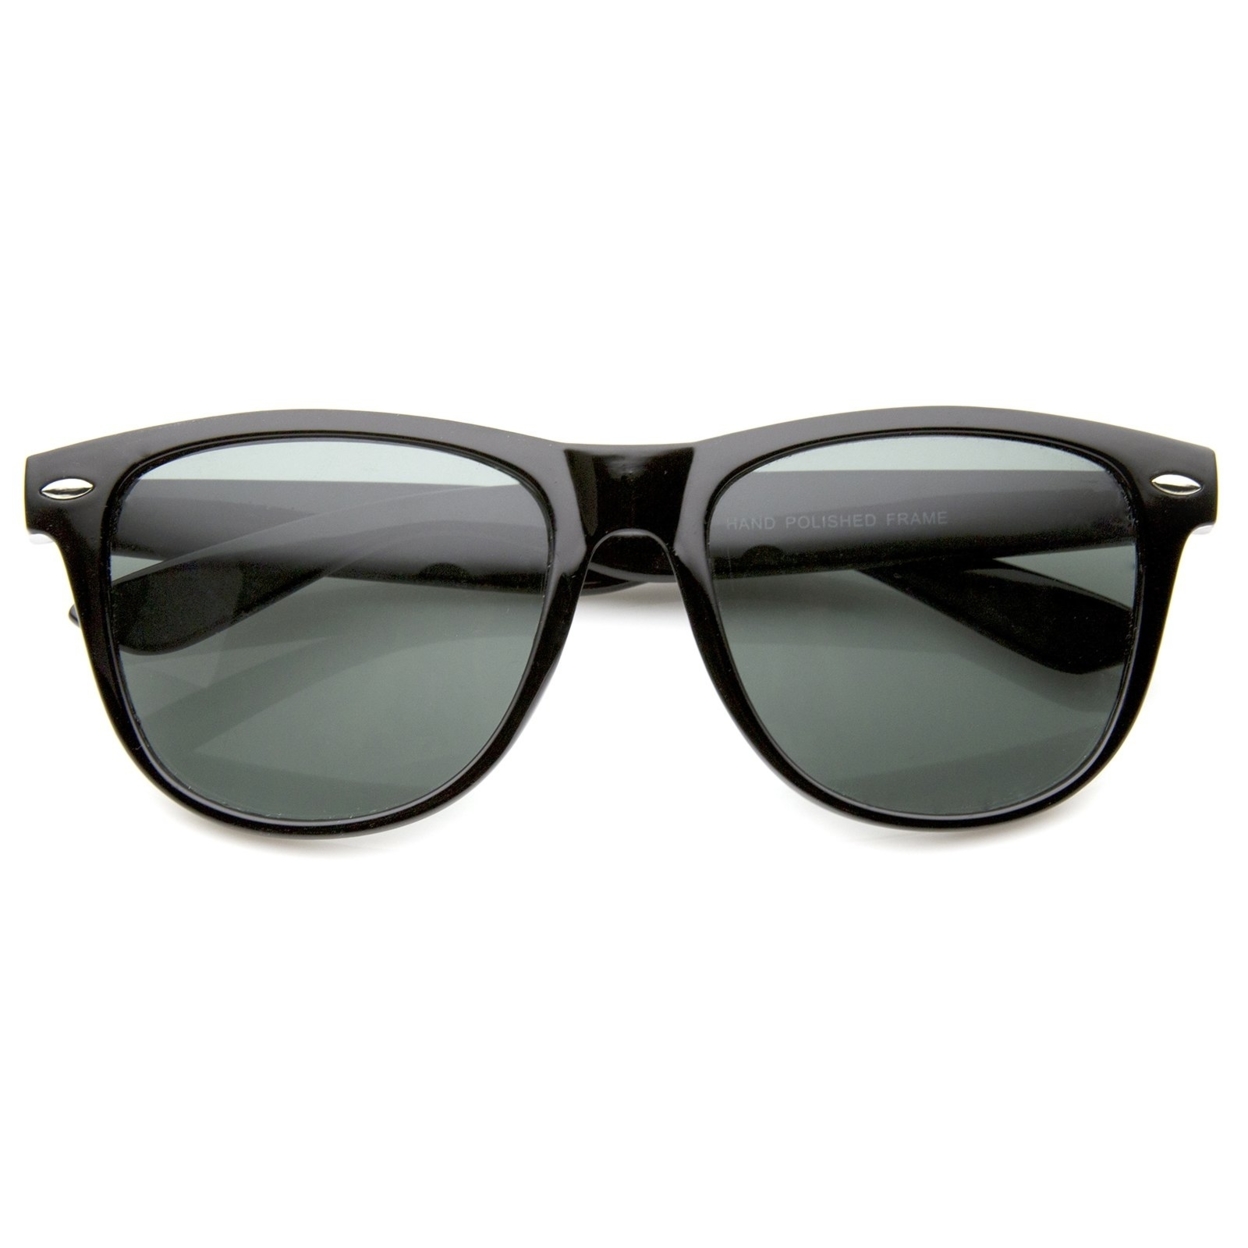 Large Retro Classic Glass Lens Casual Horn Rimmed Sunglasses 54mm - Black / Smoke